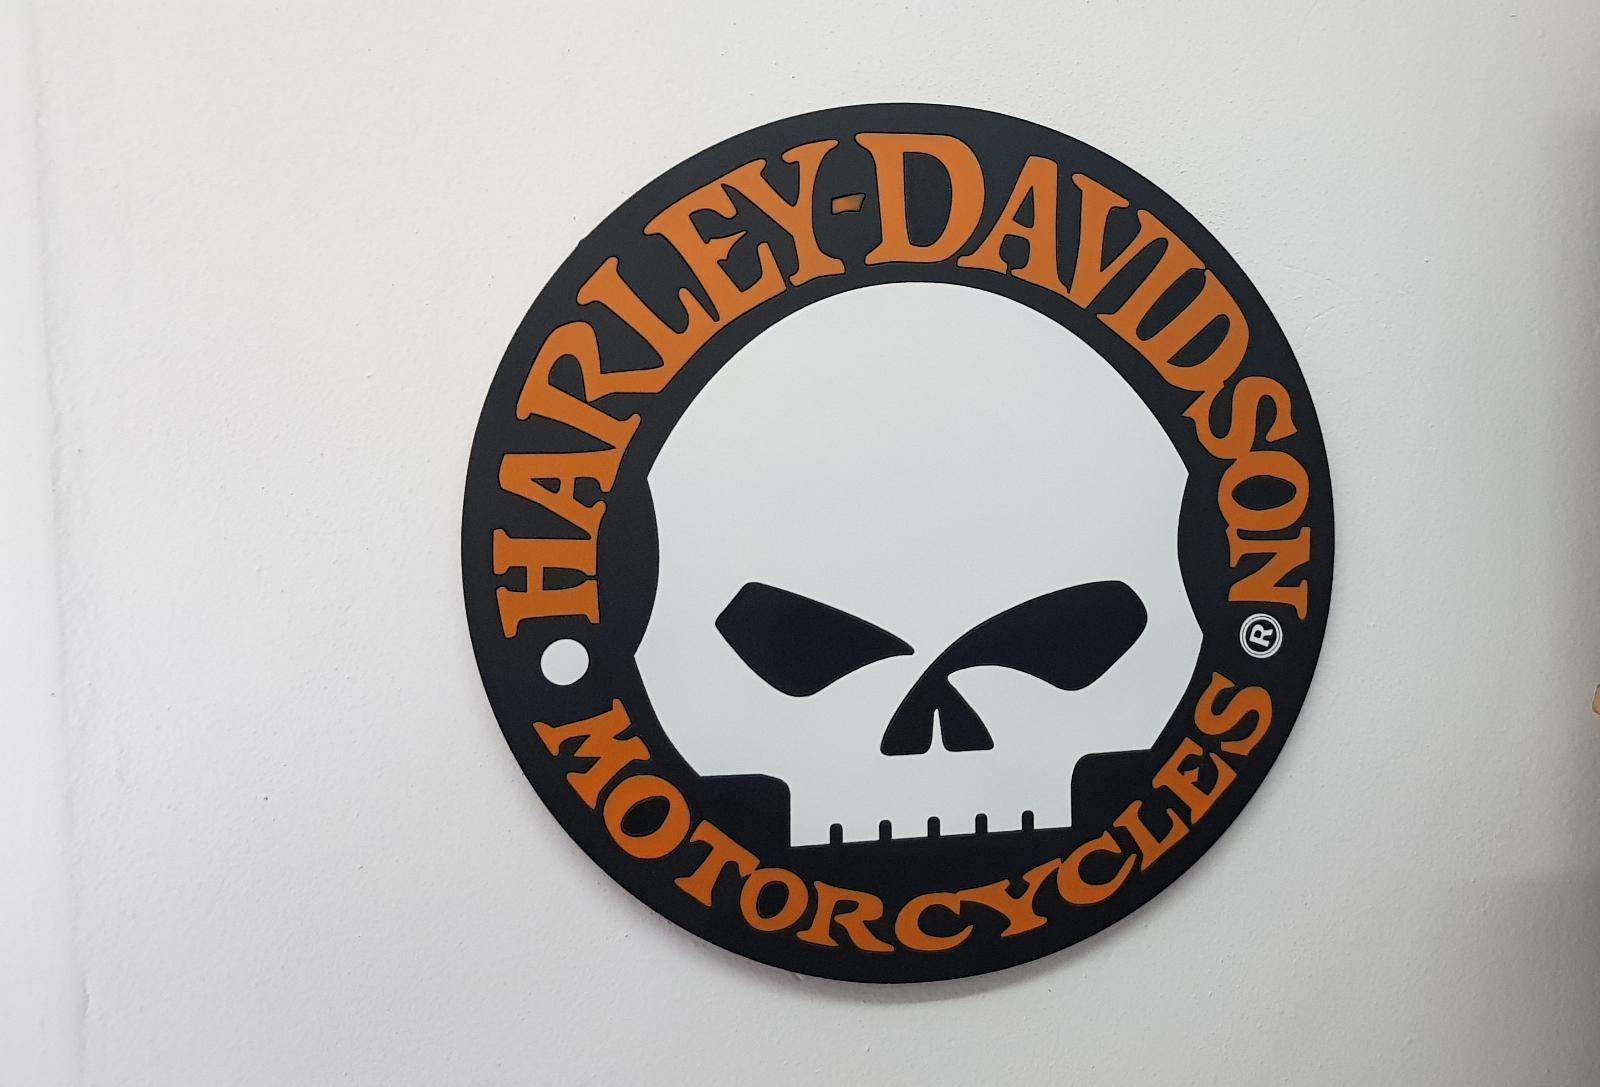 Harley Davidson ceduľka - Auto-moto